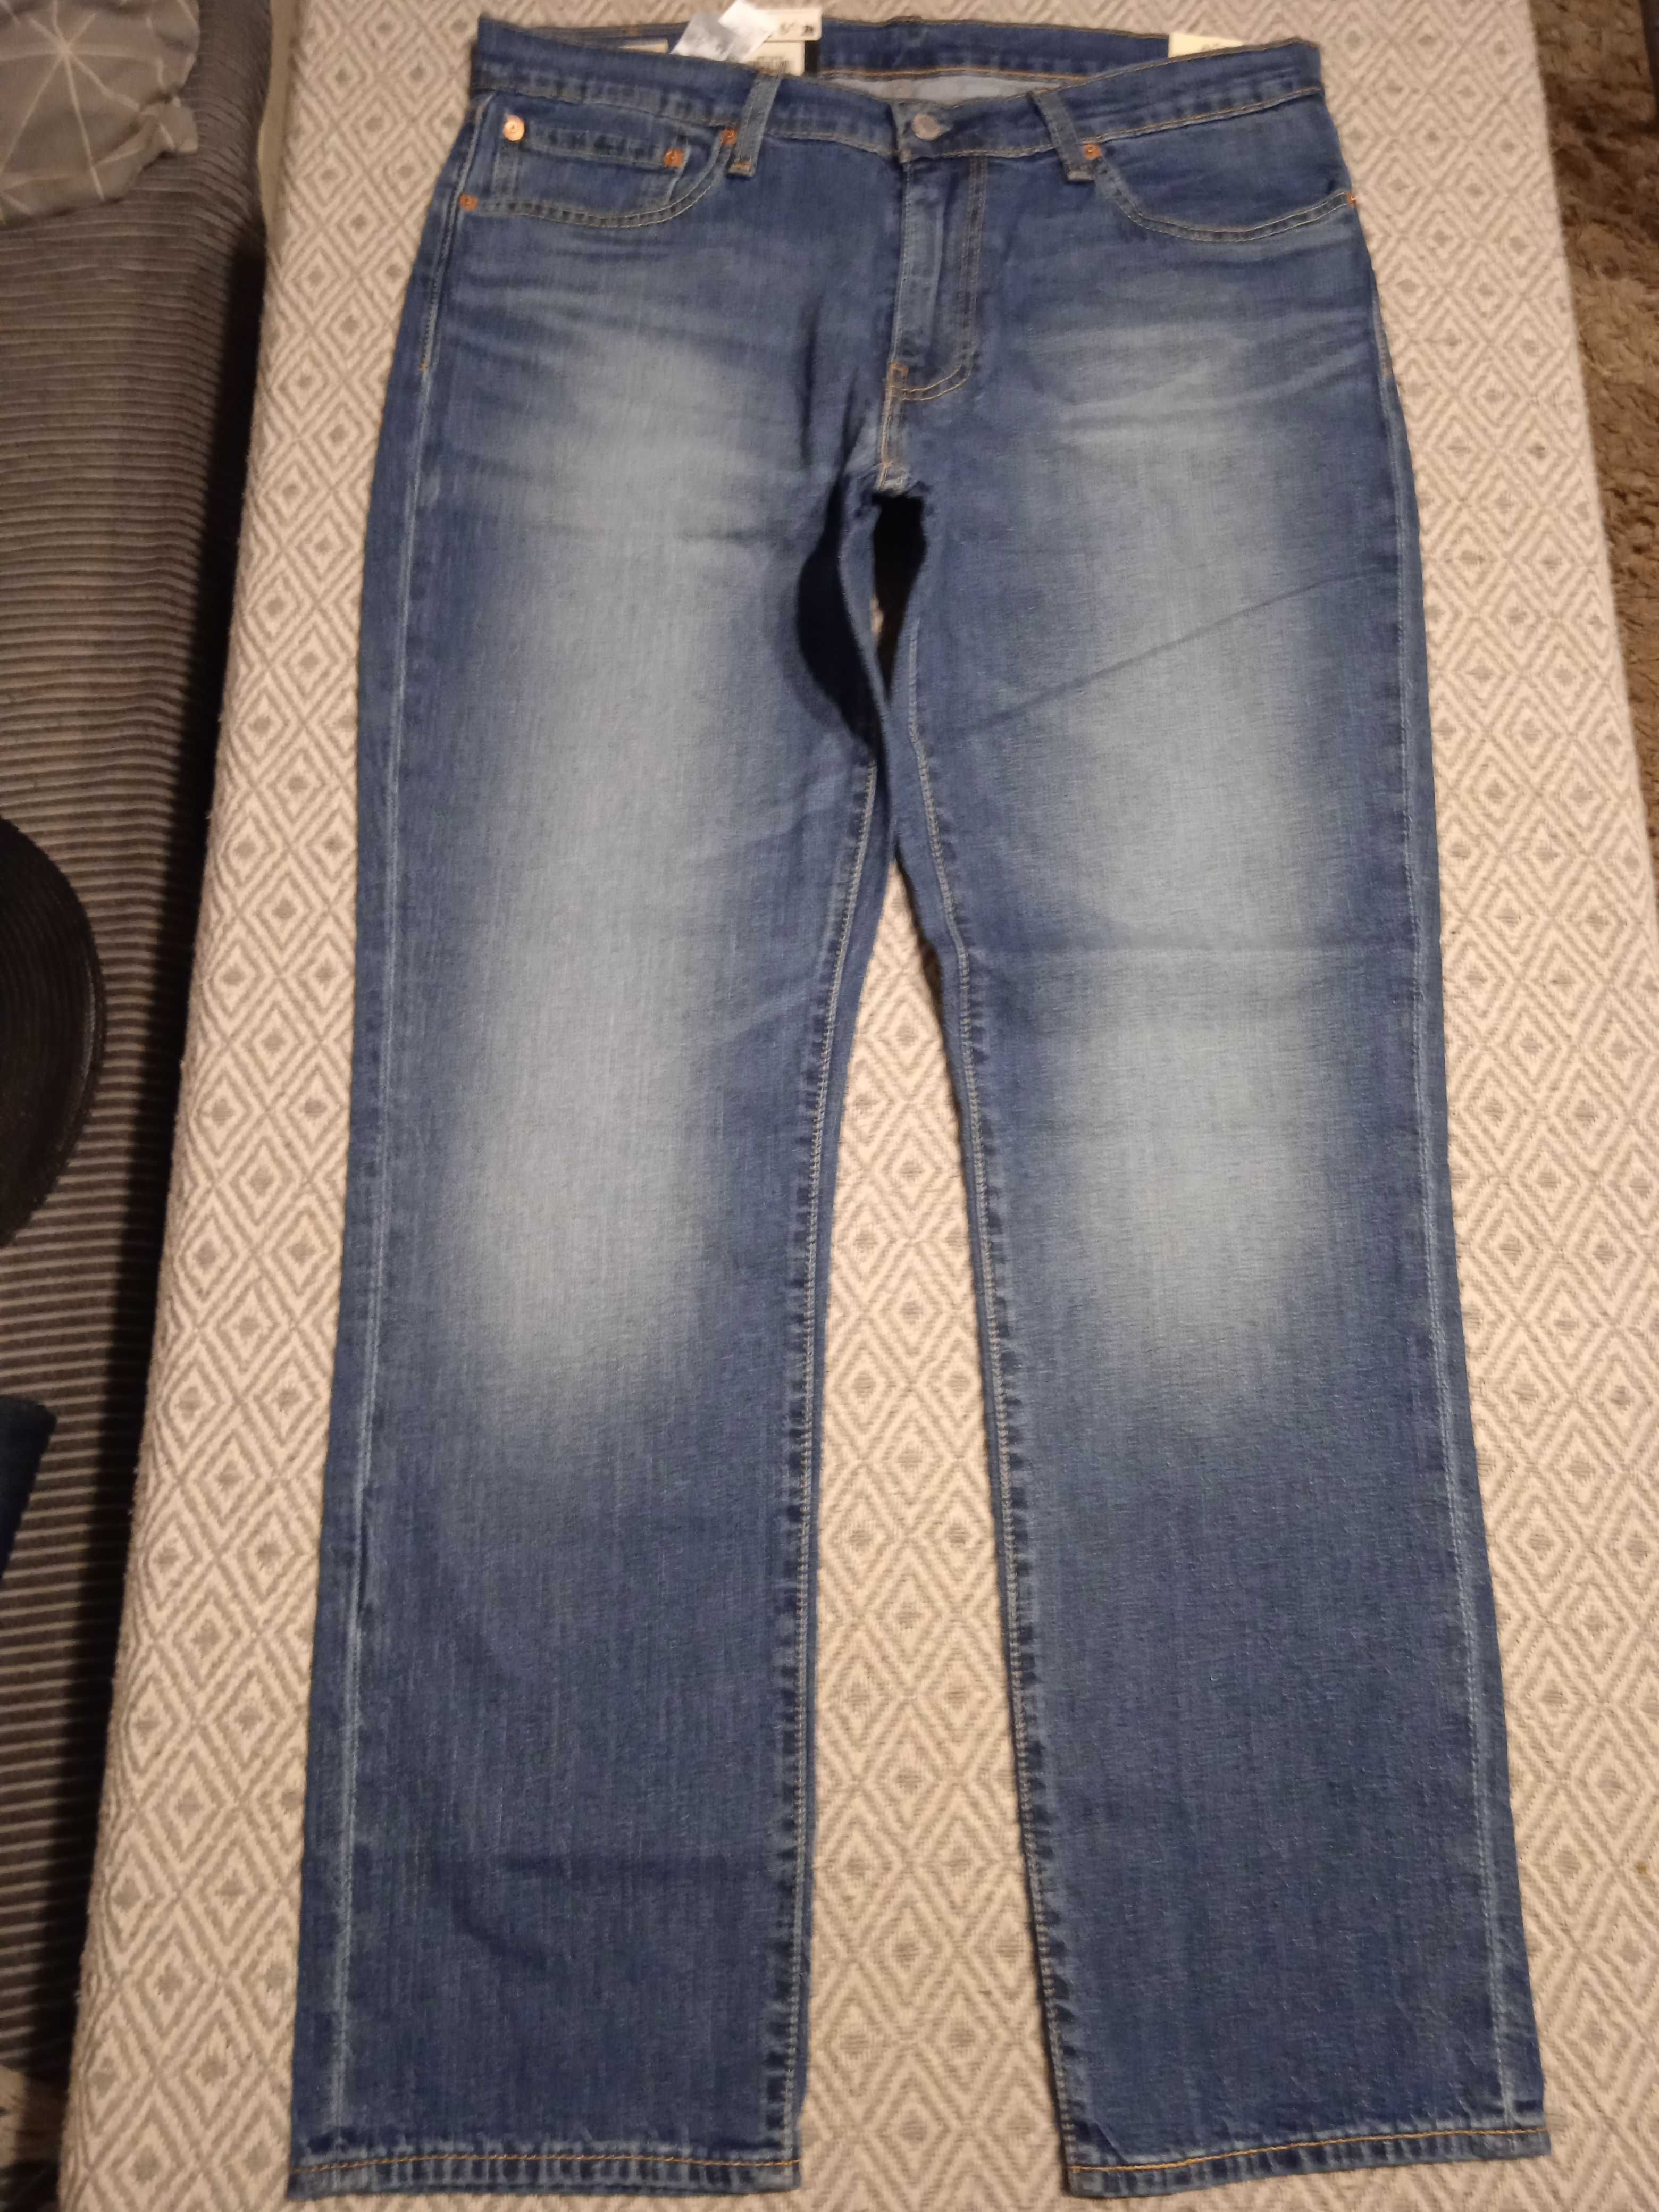 Levis 511 Slim Premium Nowe jeansy W36 L30 SuperCena + Gratis! Sold!